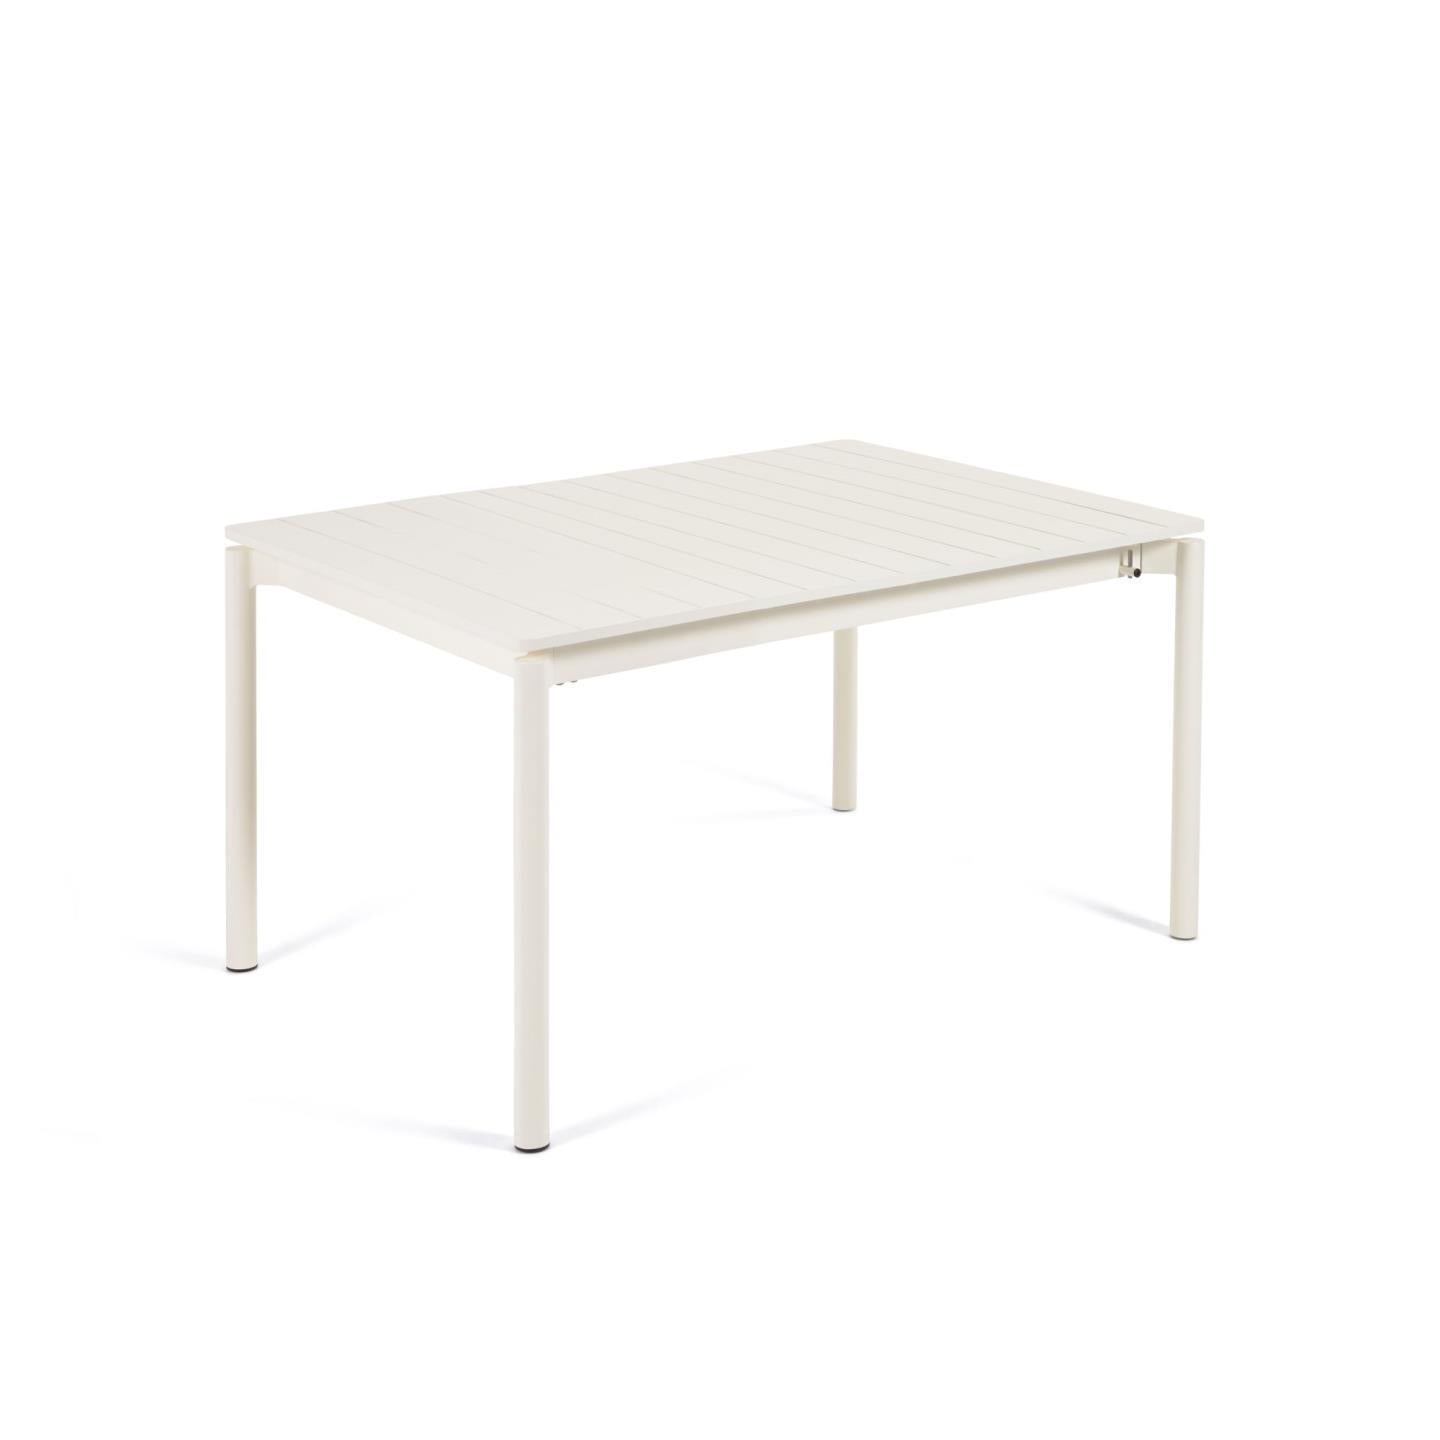 Zaltana extendable aluminium outdoor table with matt white finish 140 (200) x 90 cm